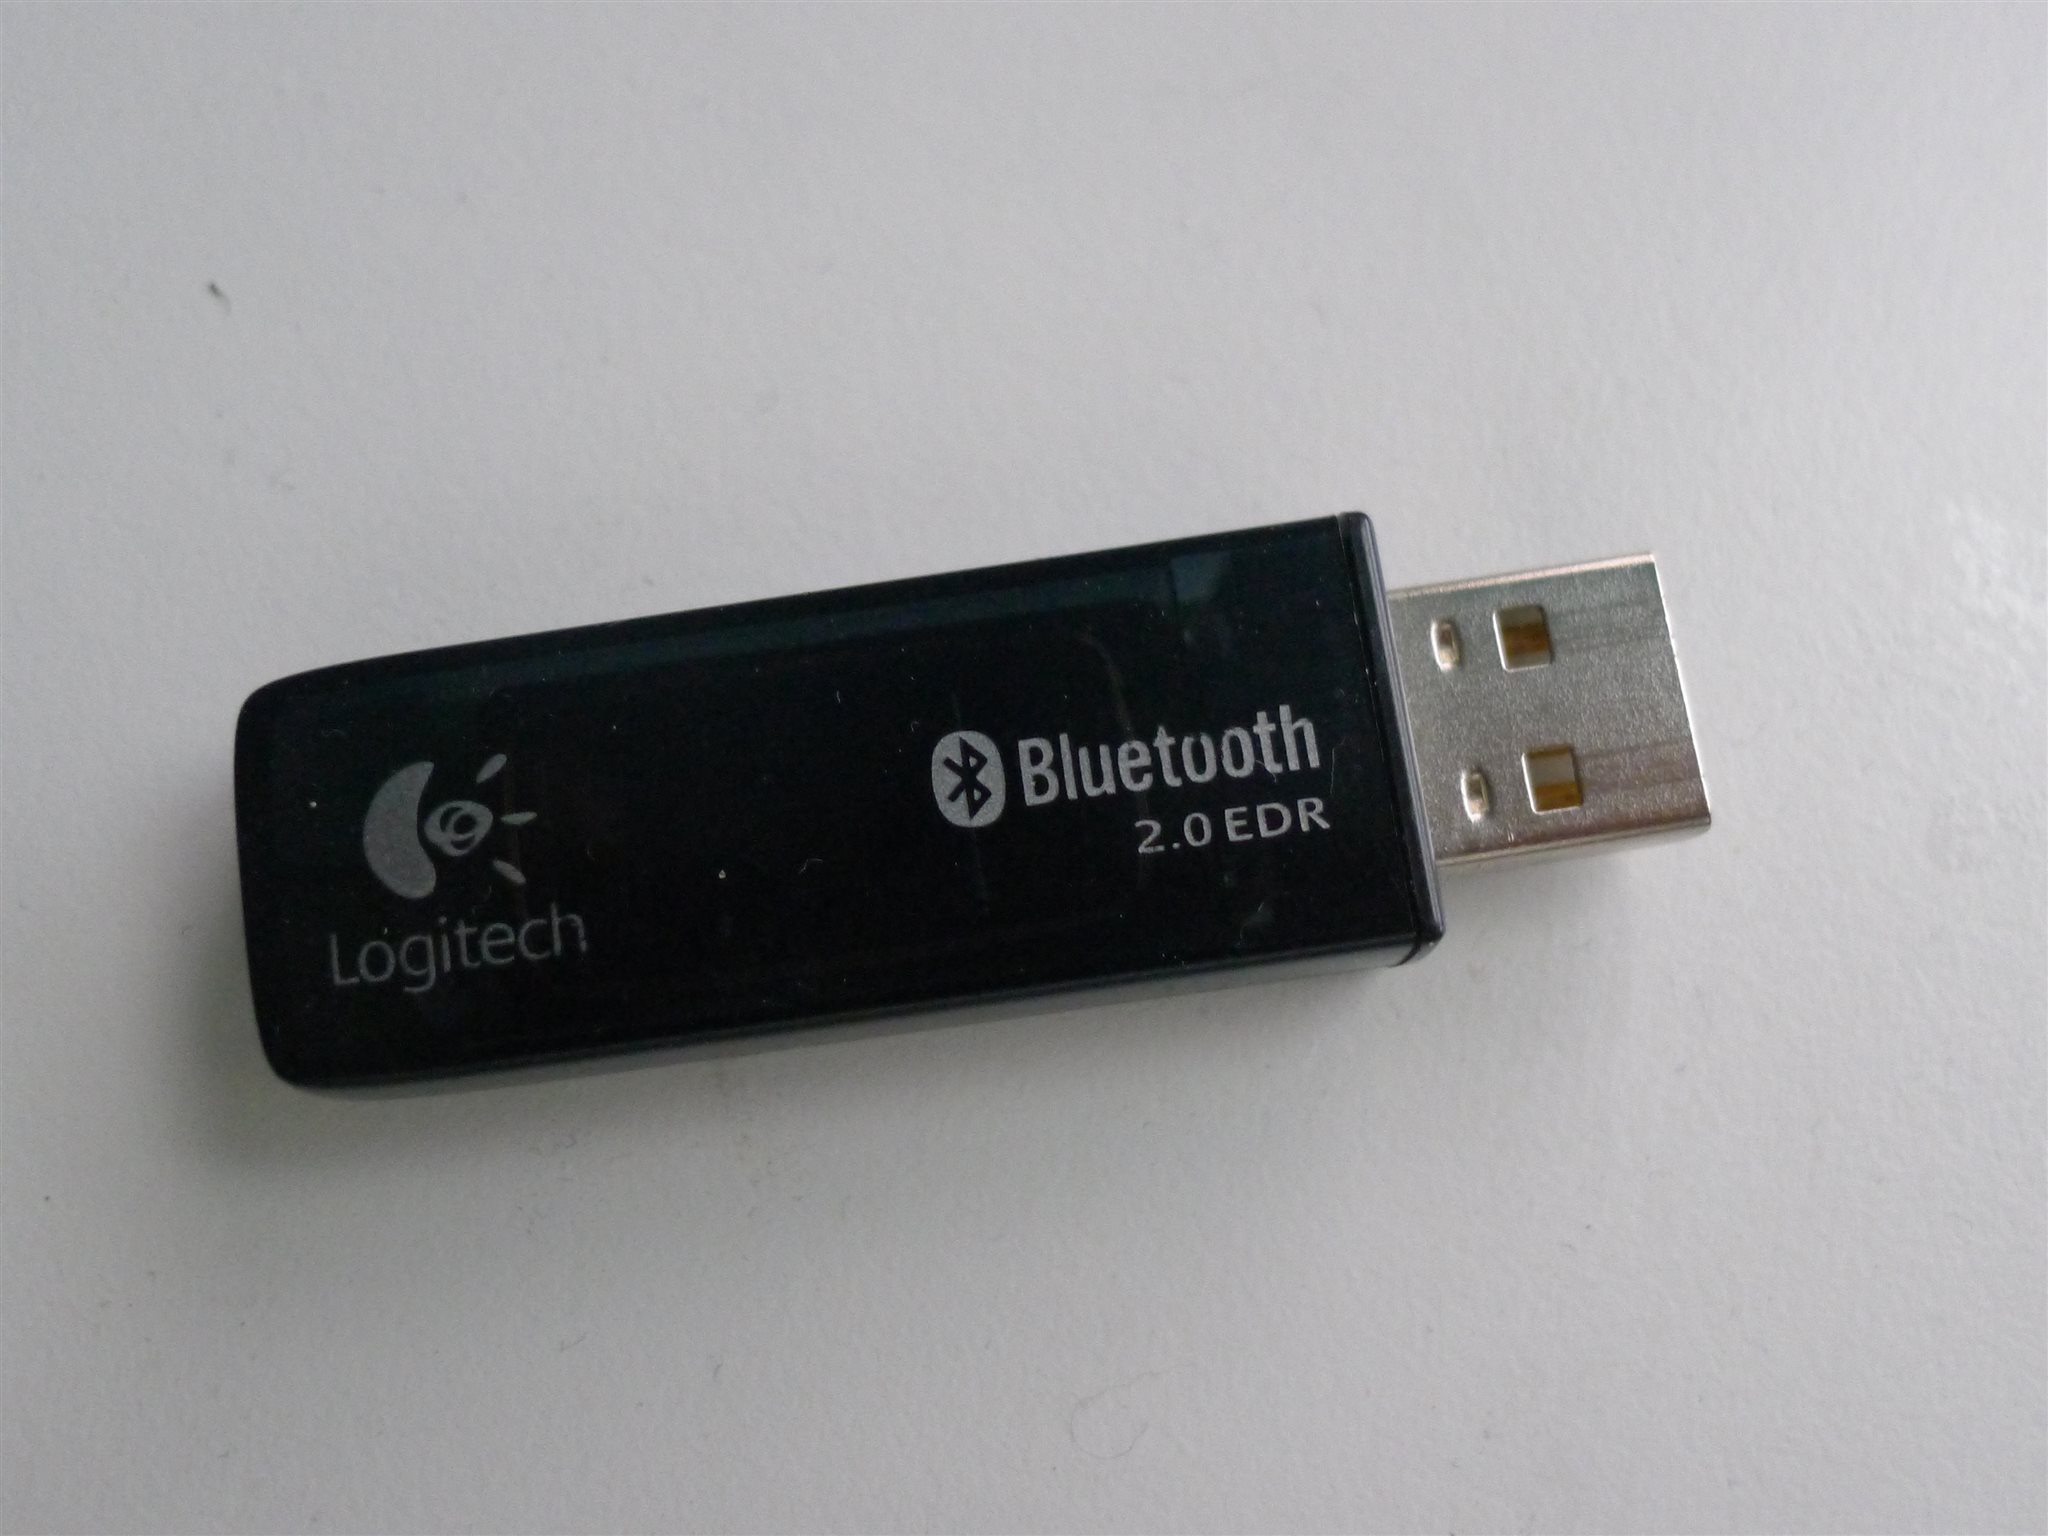 Logitech bluetooth 2.0 edr drivers for mac